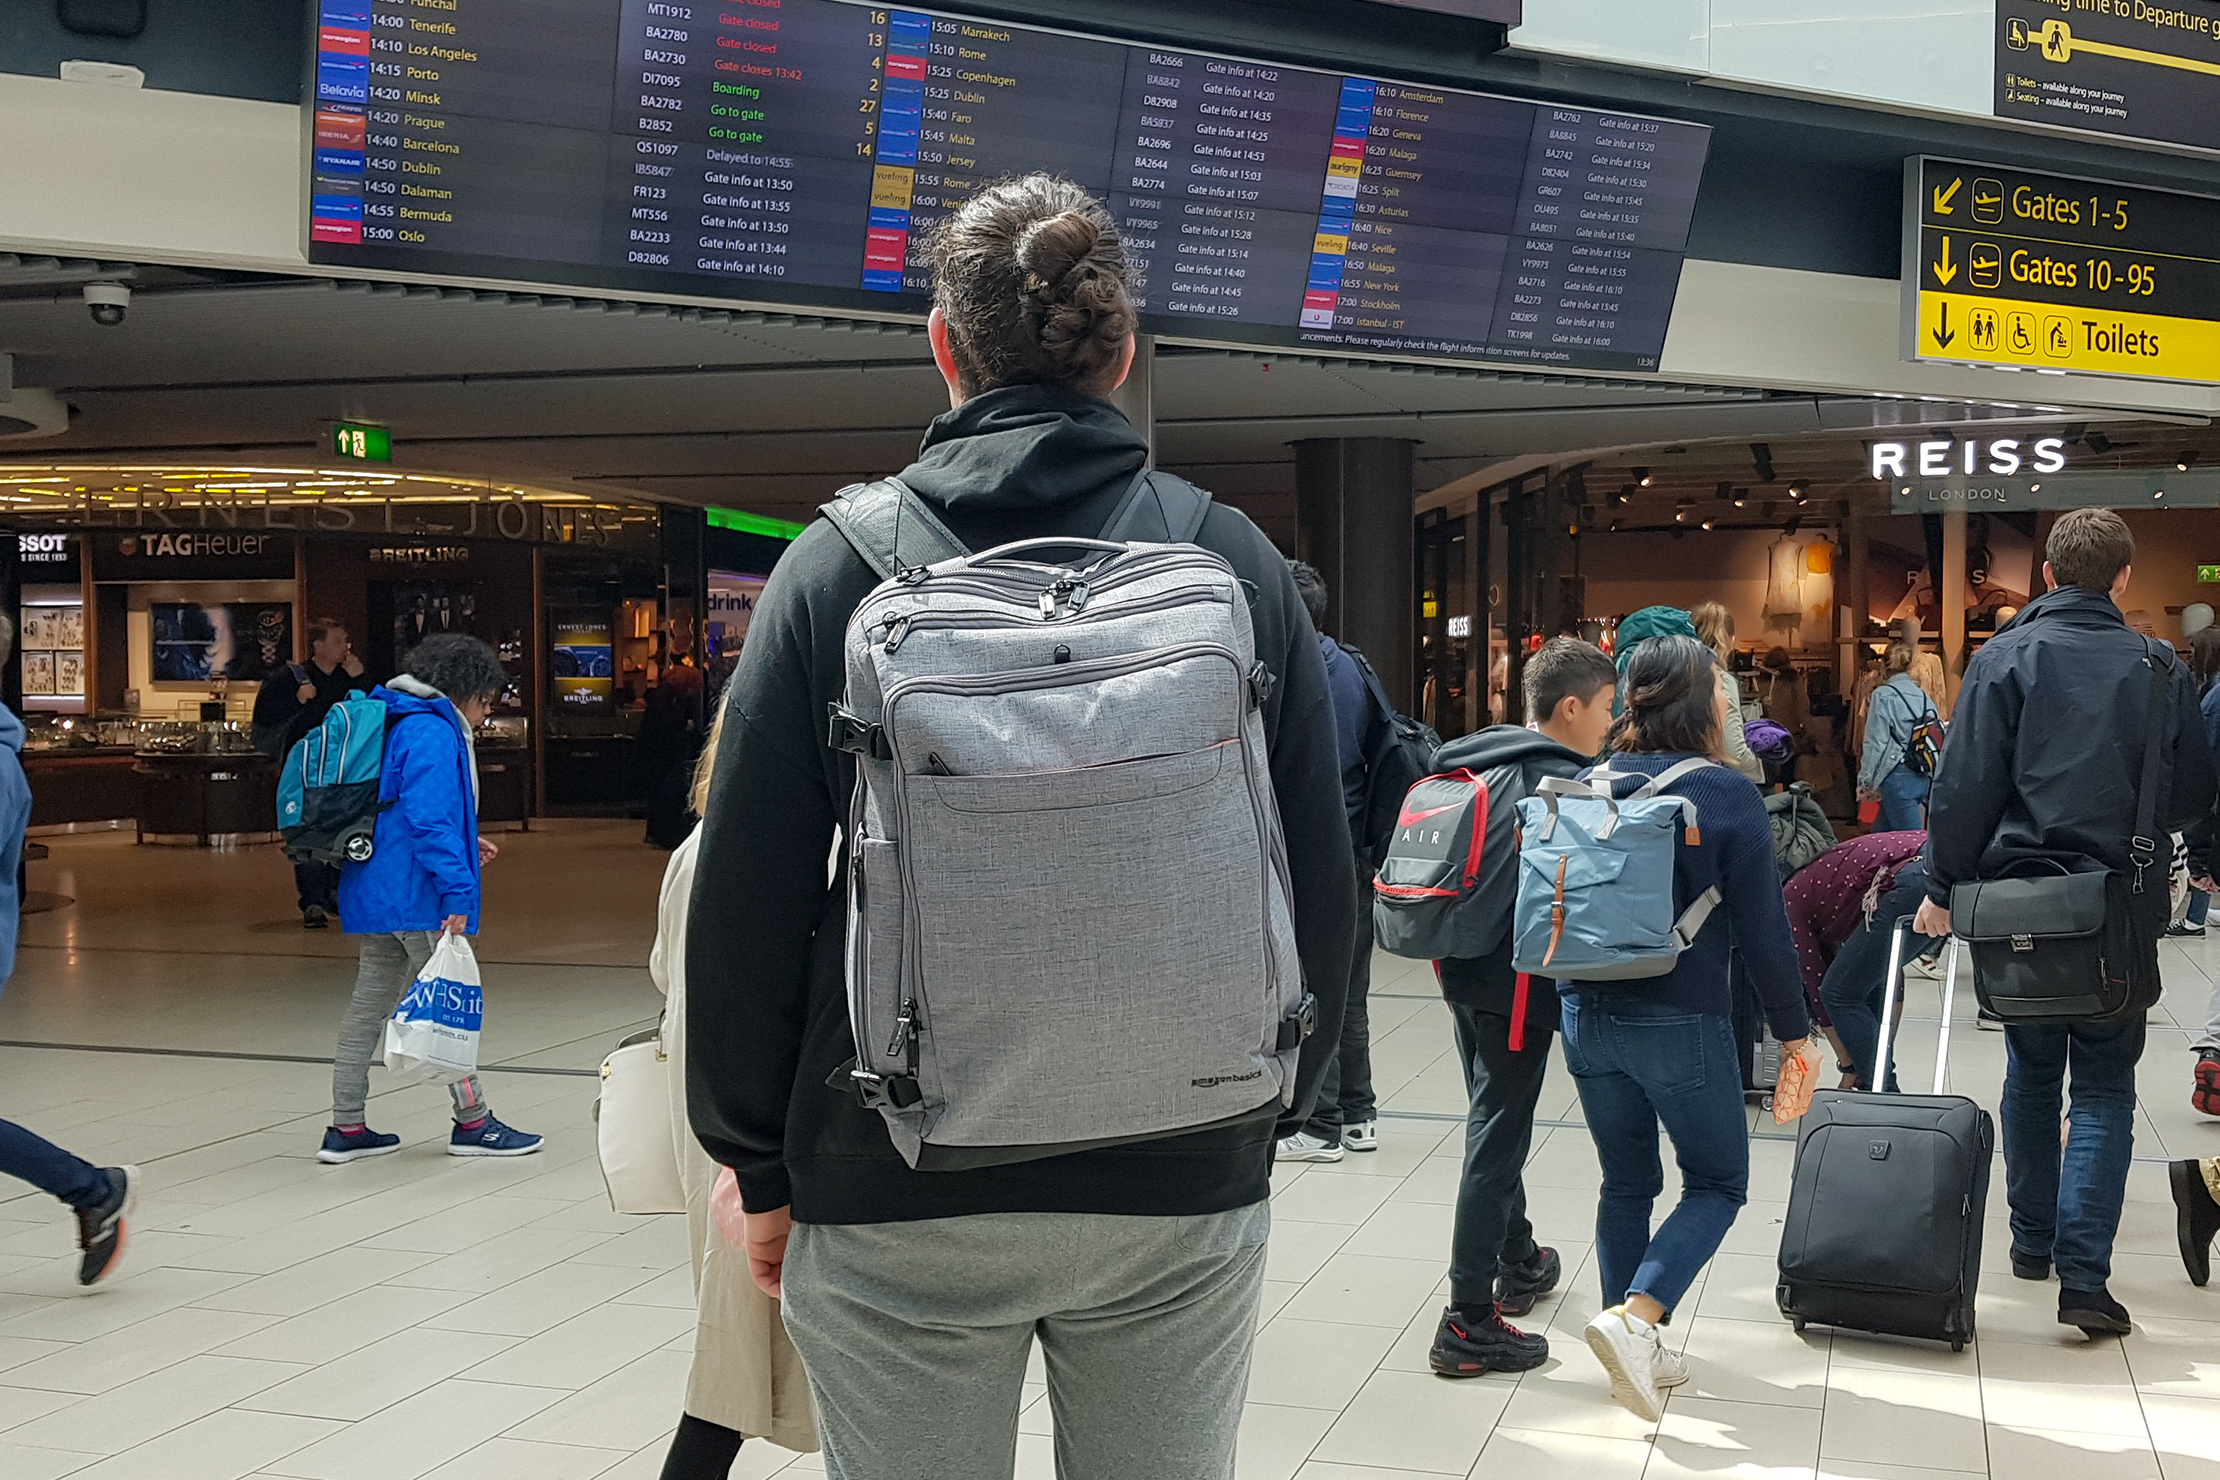 AmazonBasics Slim Travel Backpack Weekender At Gatwick Airport, London